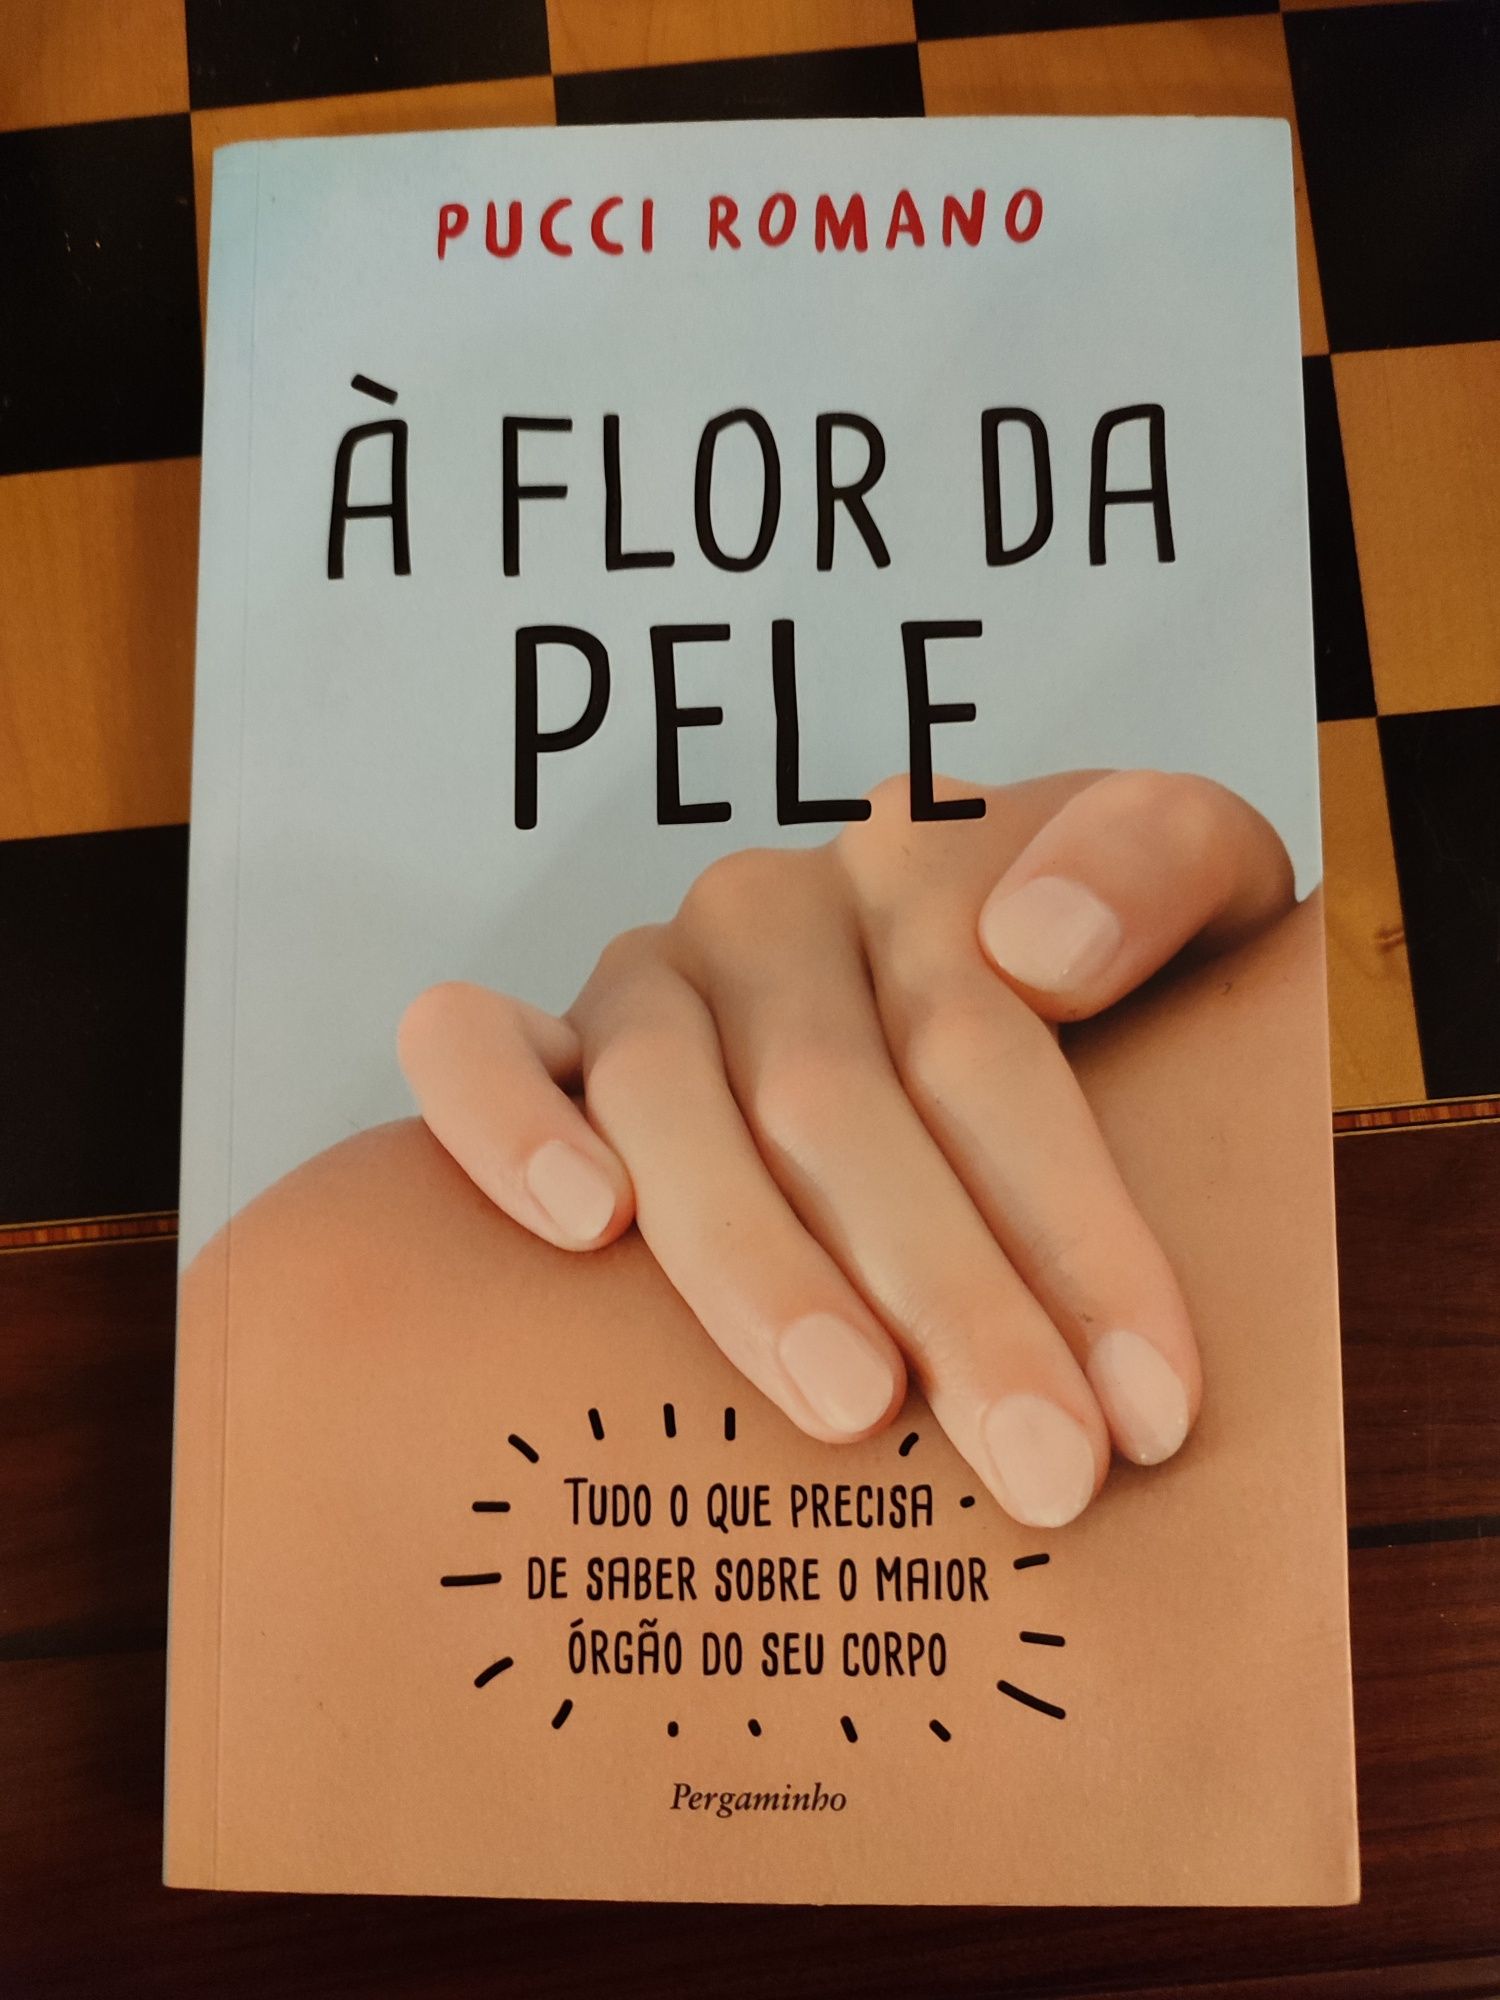 Livro "À Flor da Pele", de Pucci Romano